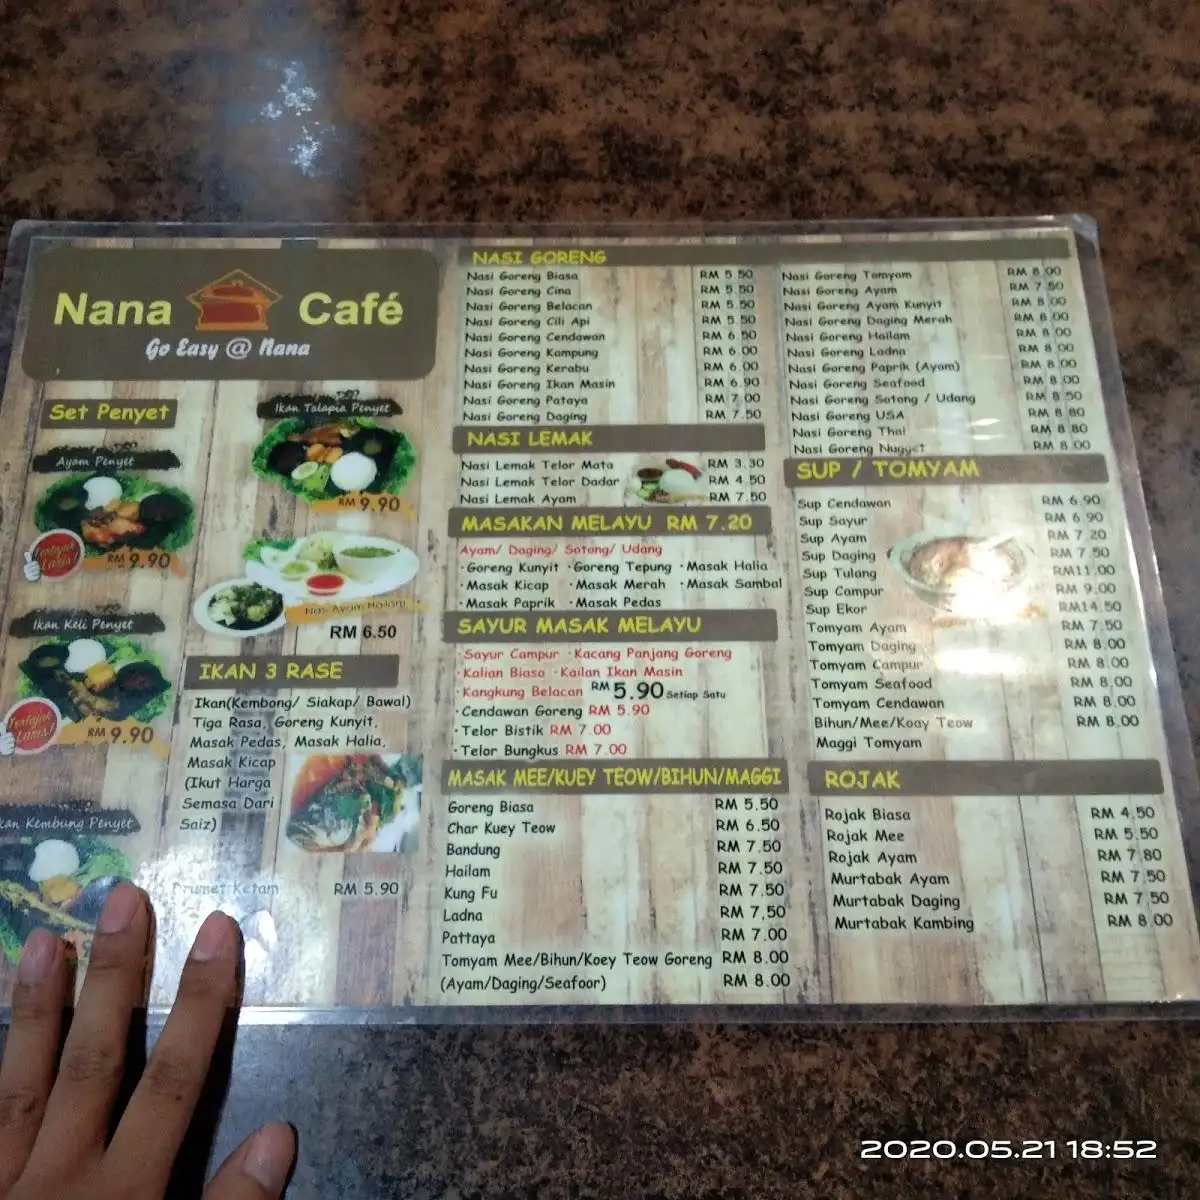 Nana Cafe @ Axis Pandan